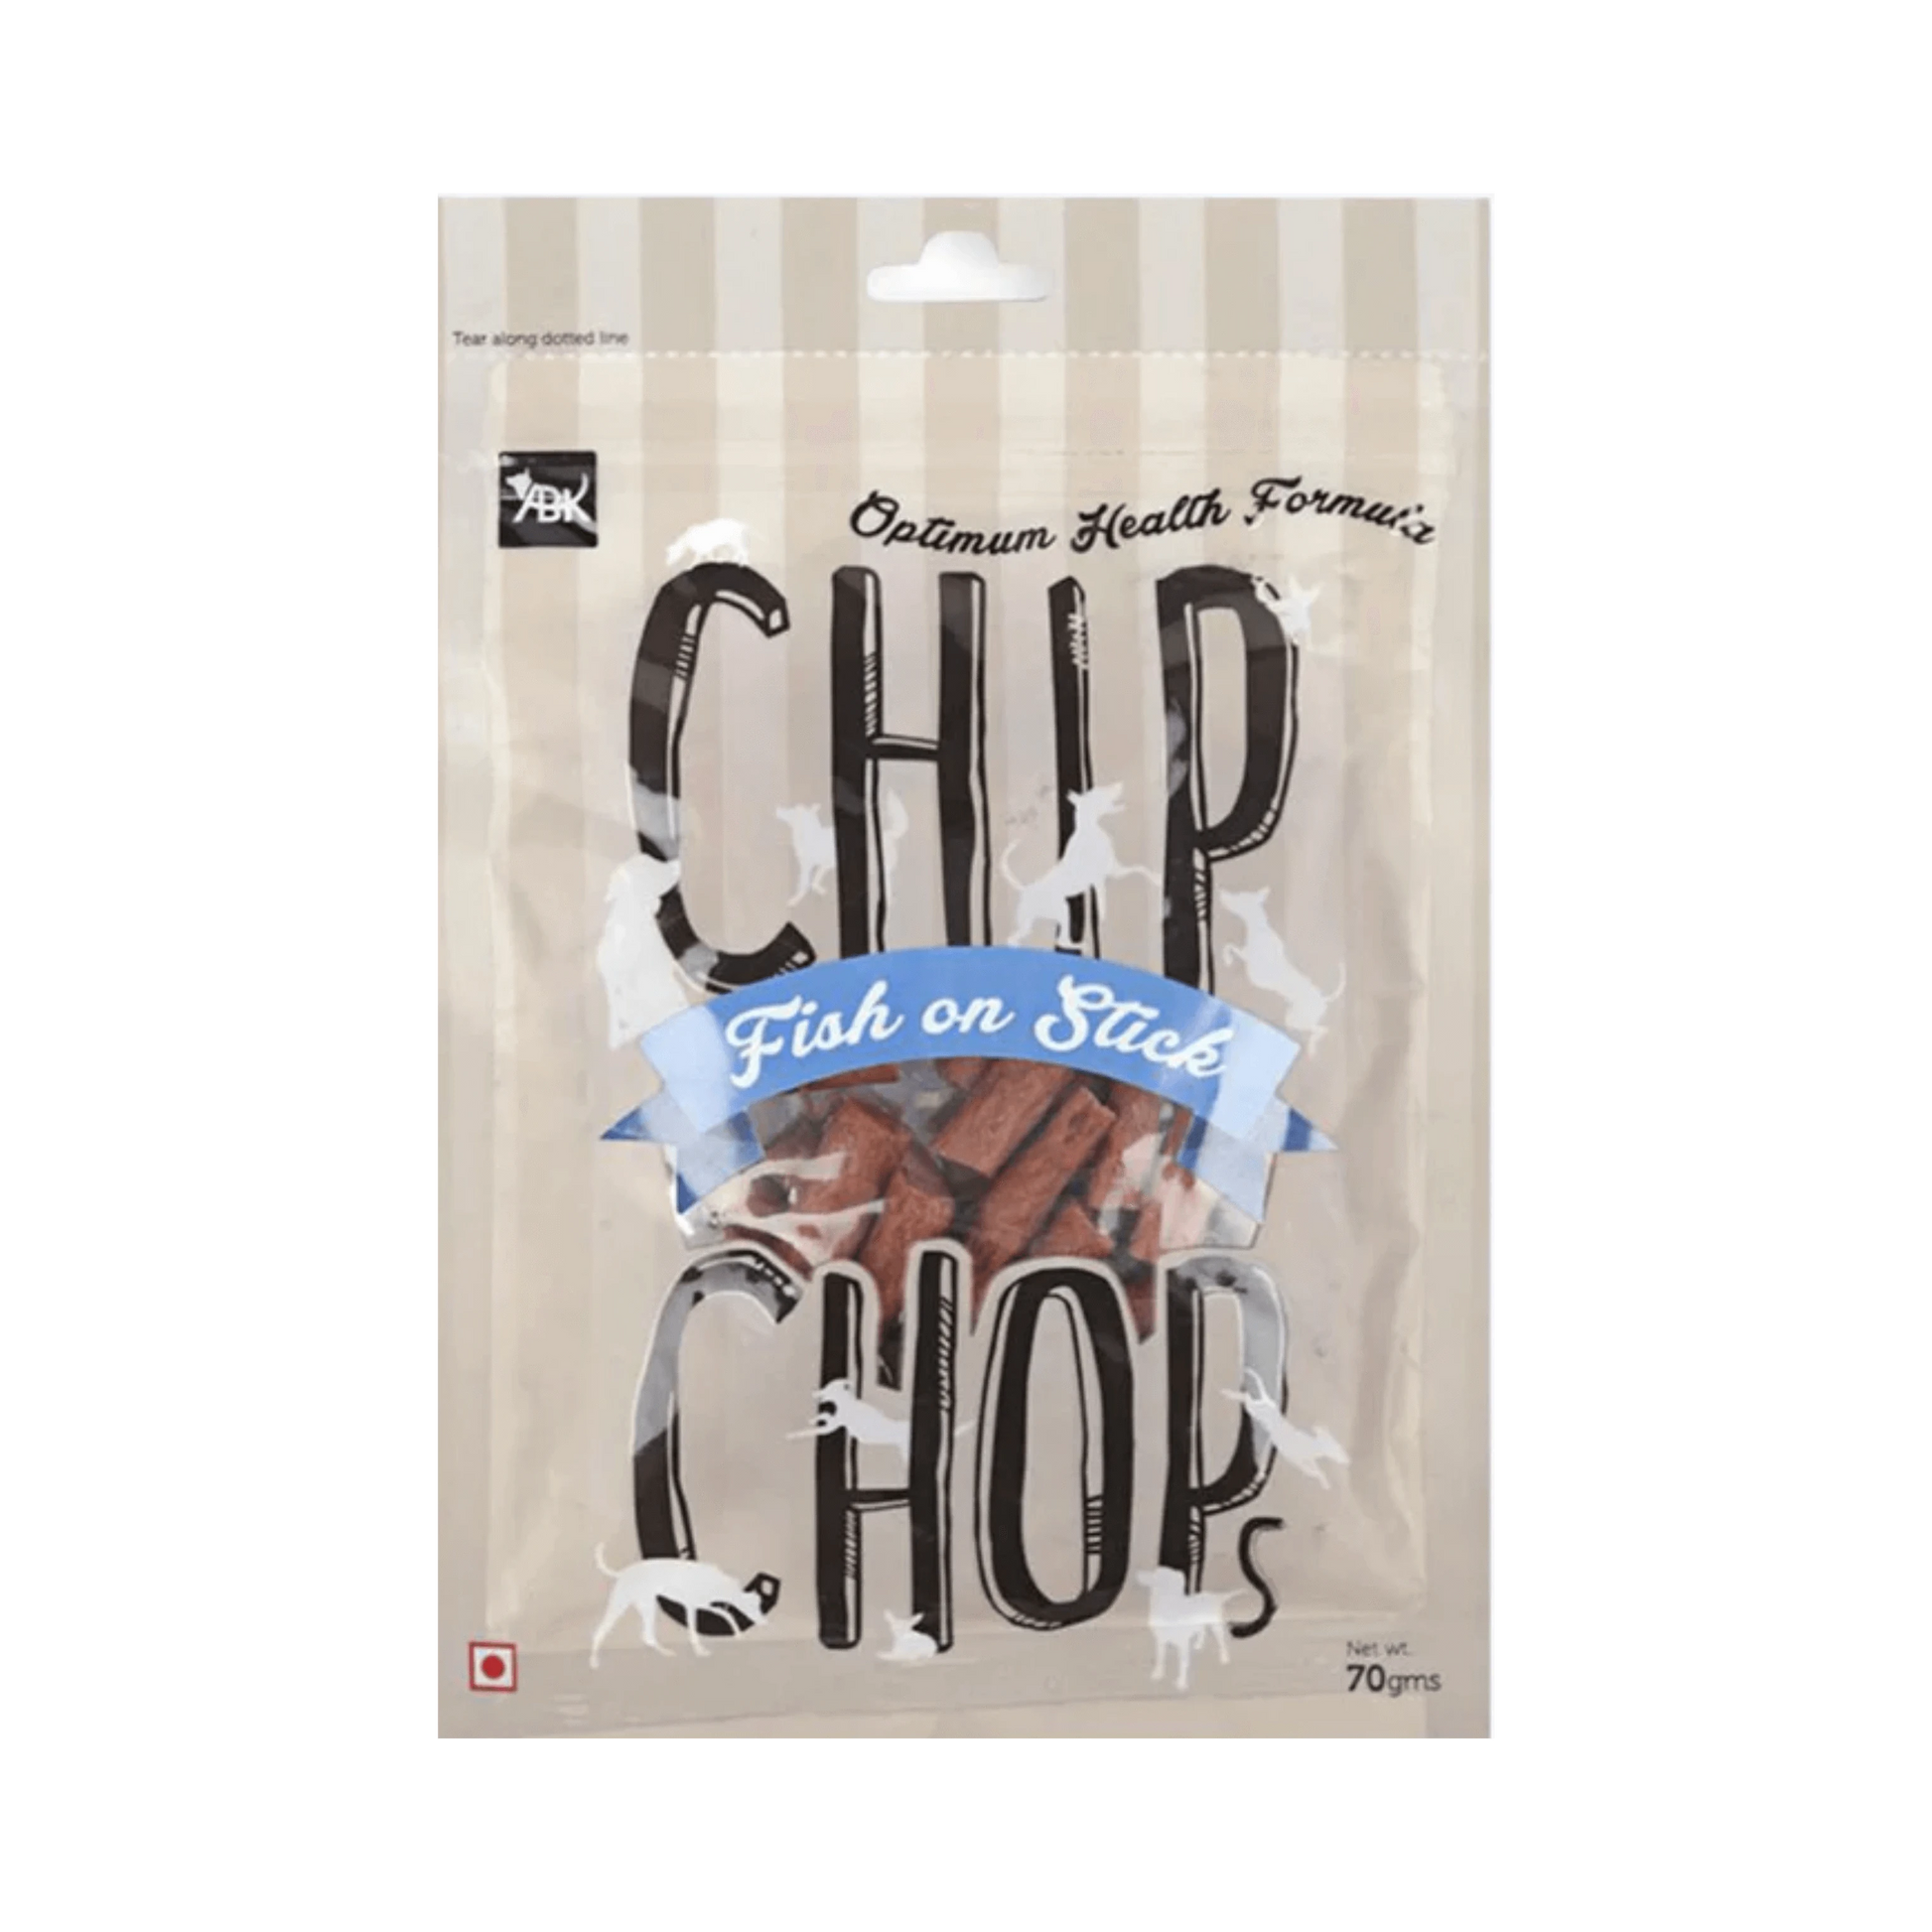 CHIP CHOP FISH ON STICK (S) - Animeal